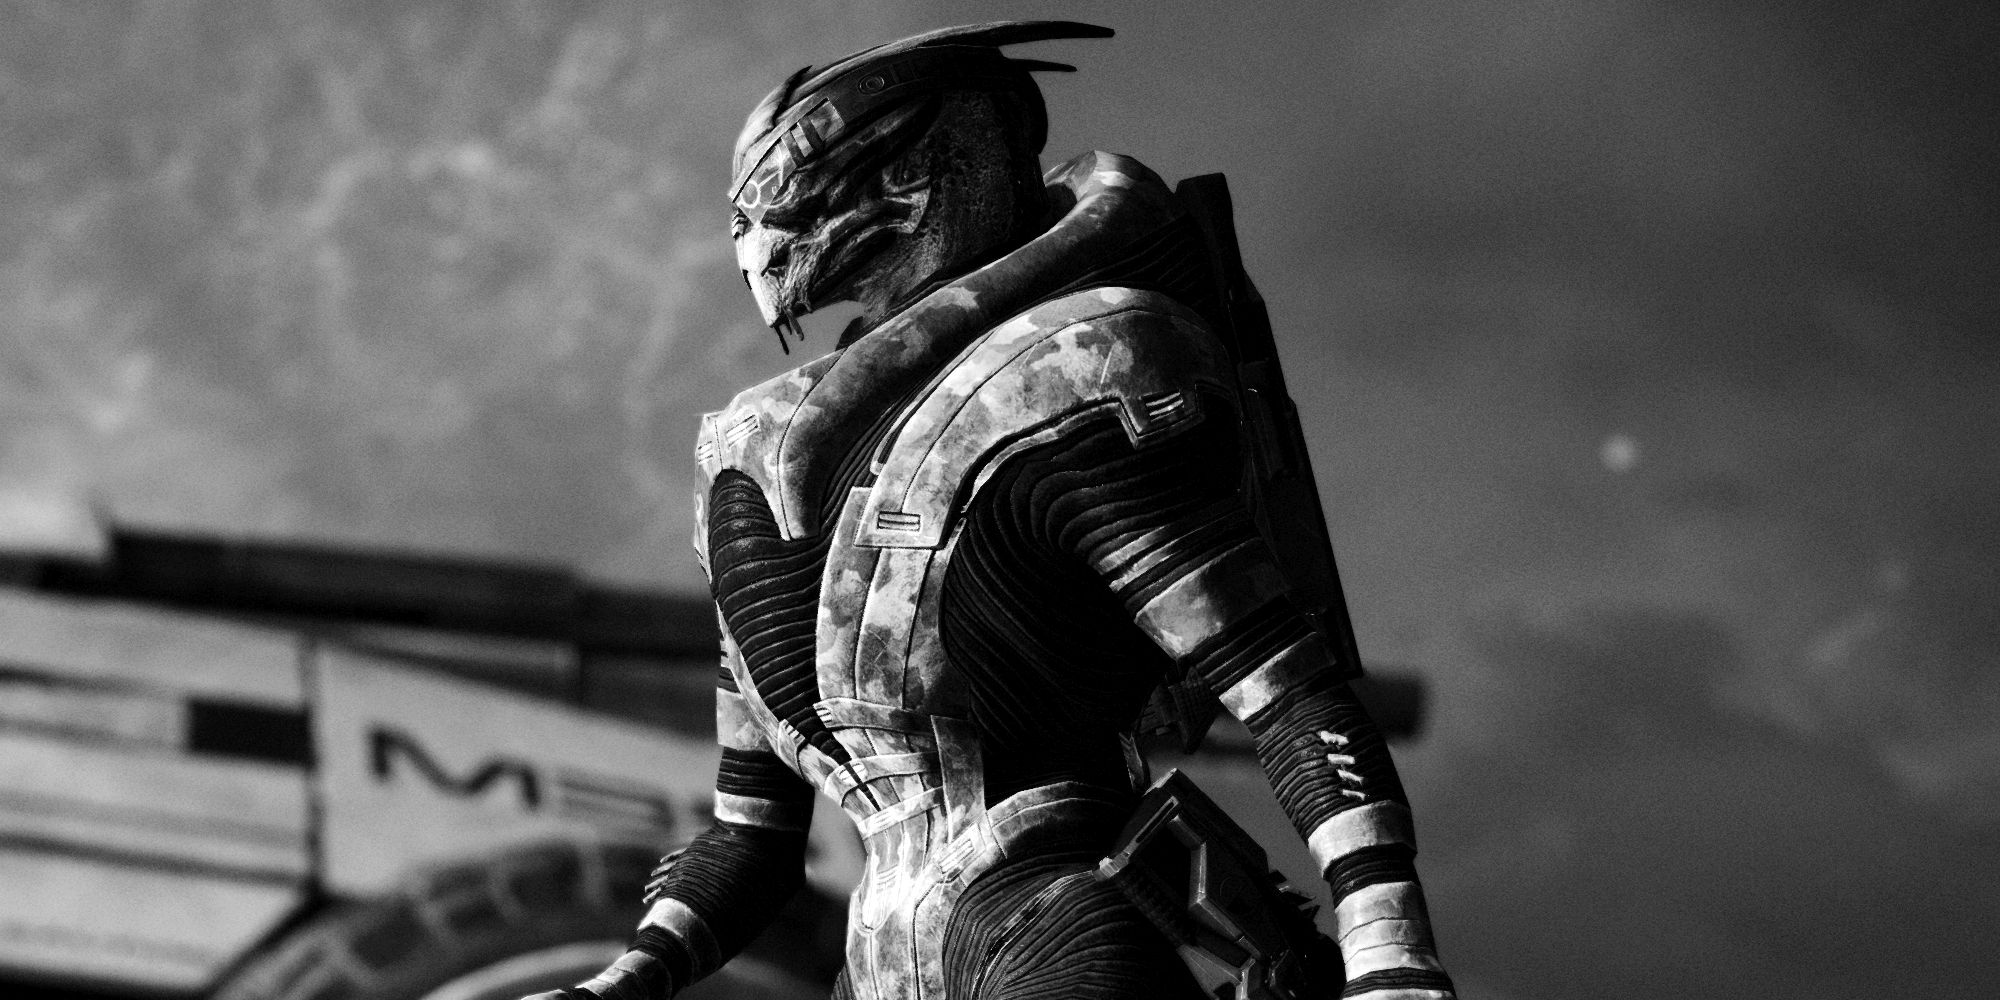 Garrus in Mass Effect Legendary Edition Photo Mode Edited